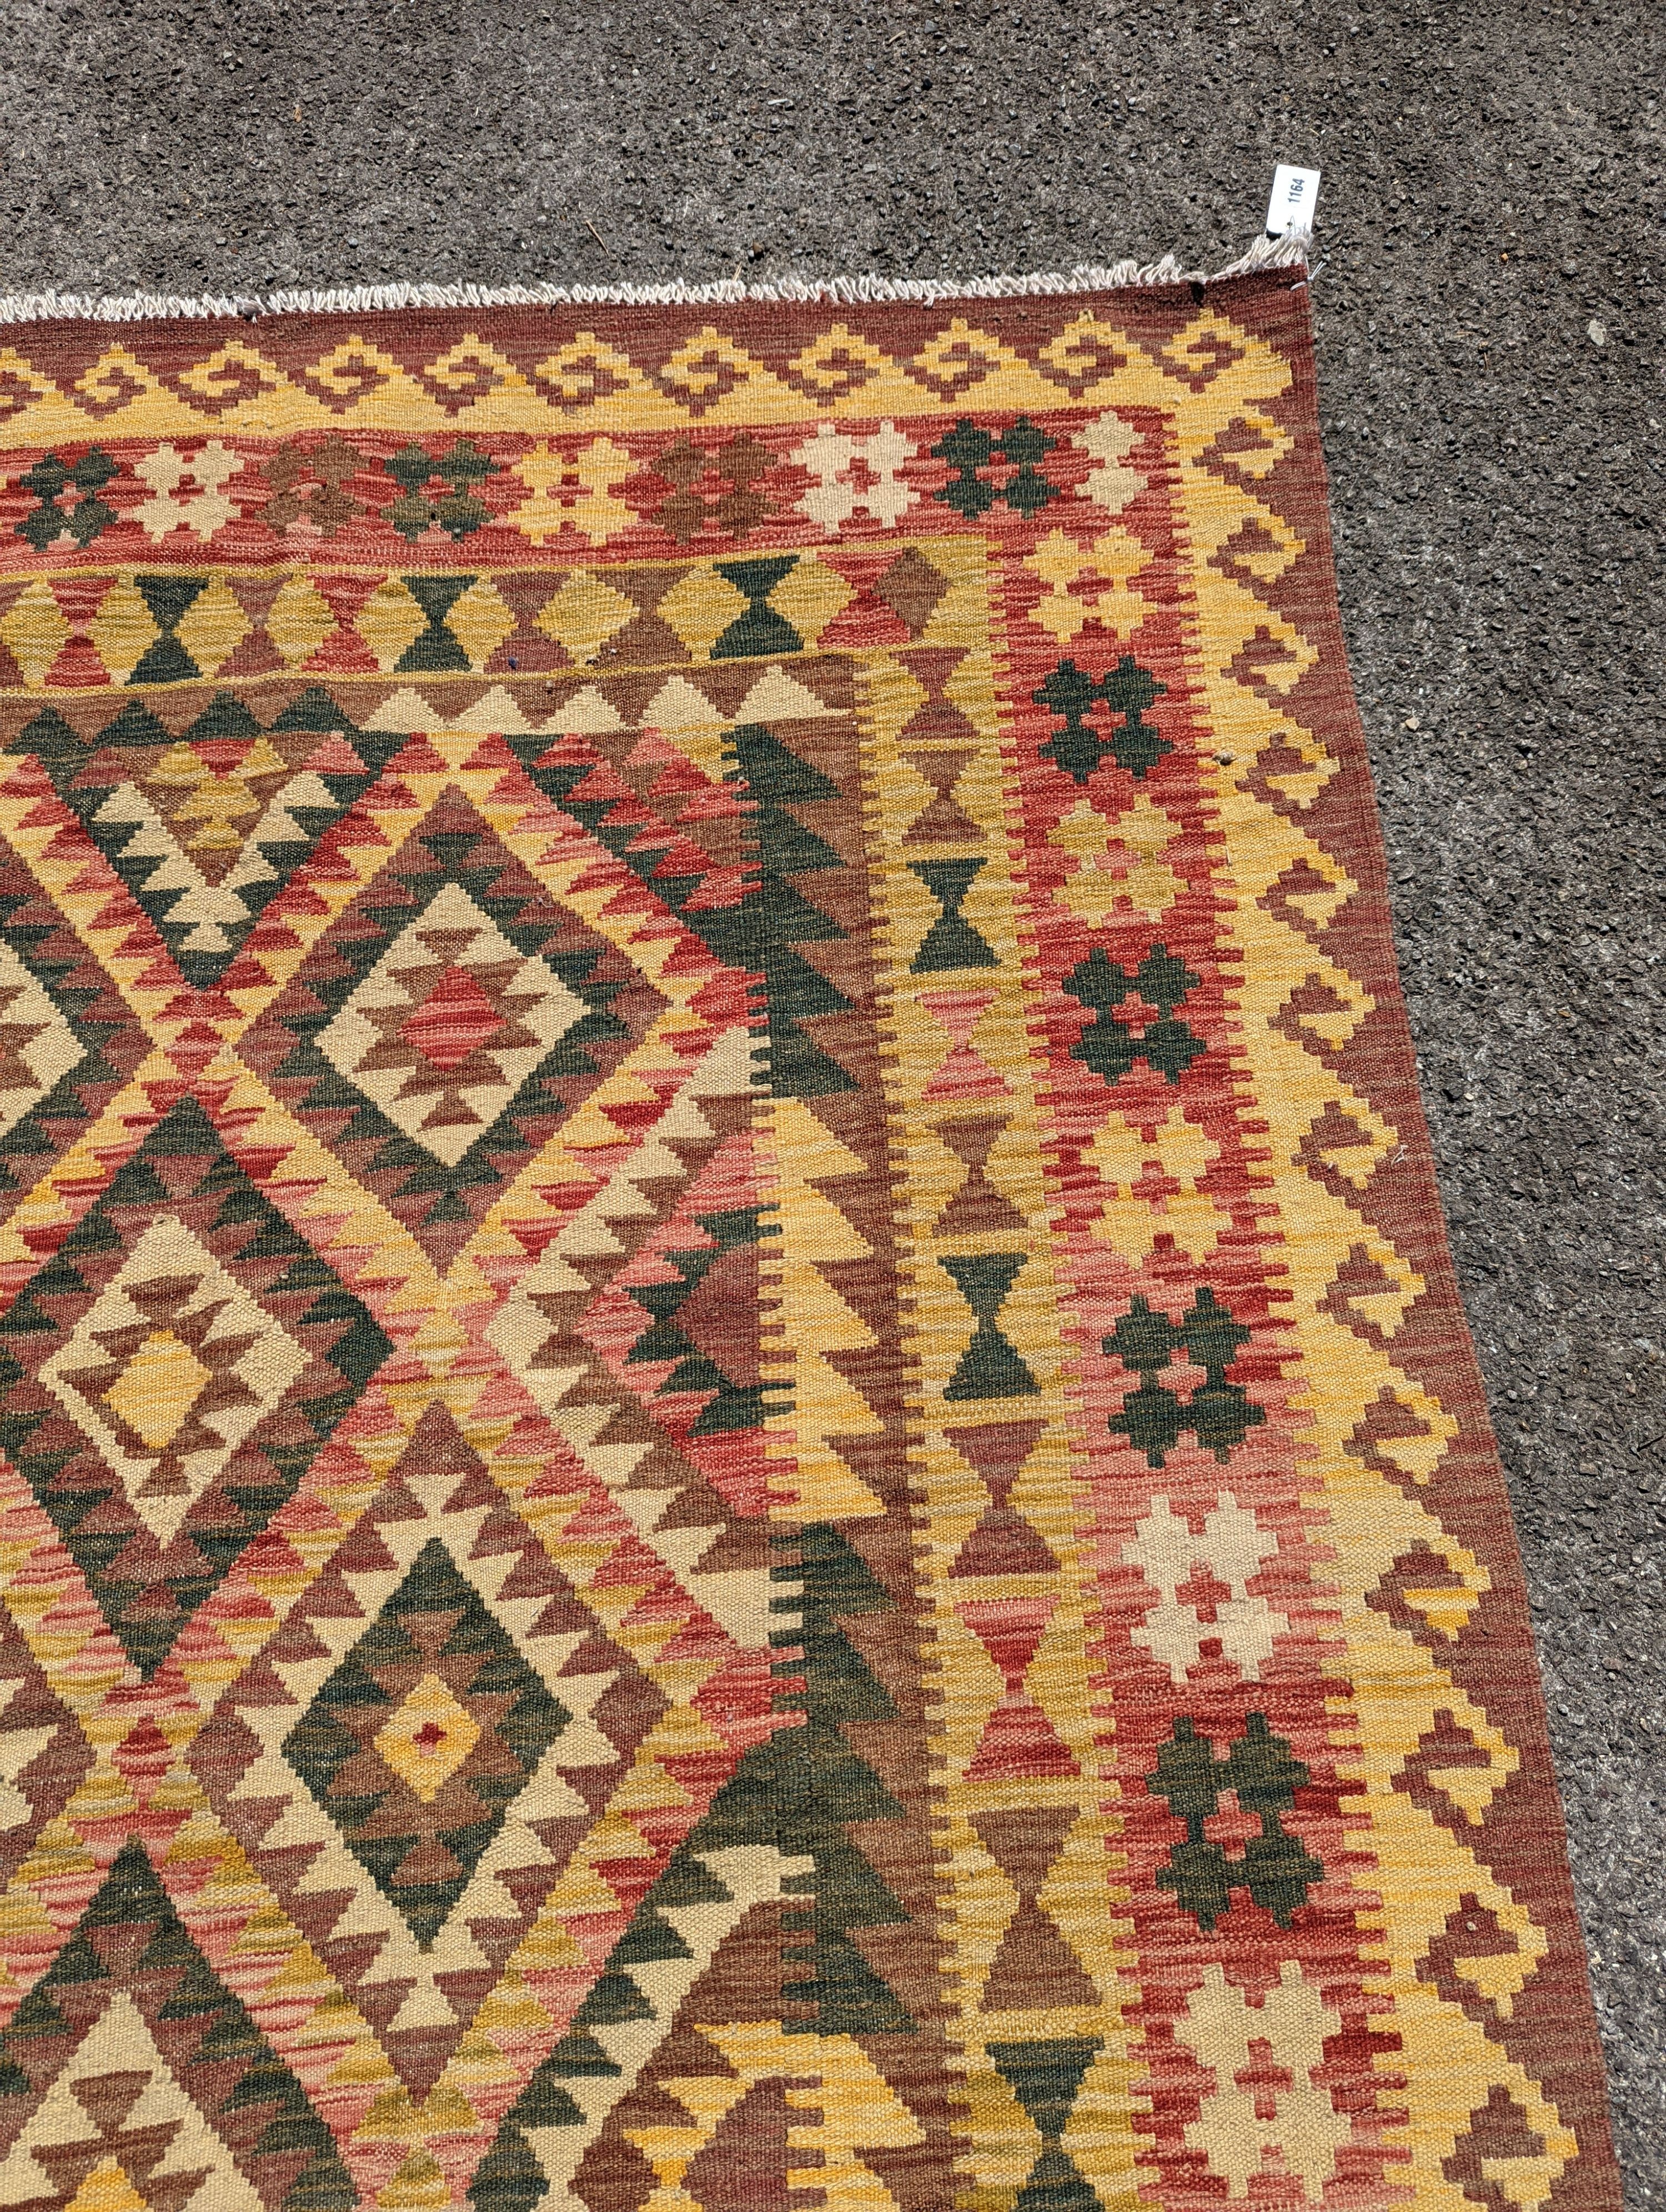 An Anatolian design polychrome geometric flatweave Kilim rug, 215 x 157cm